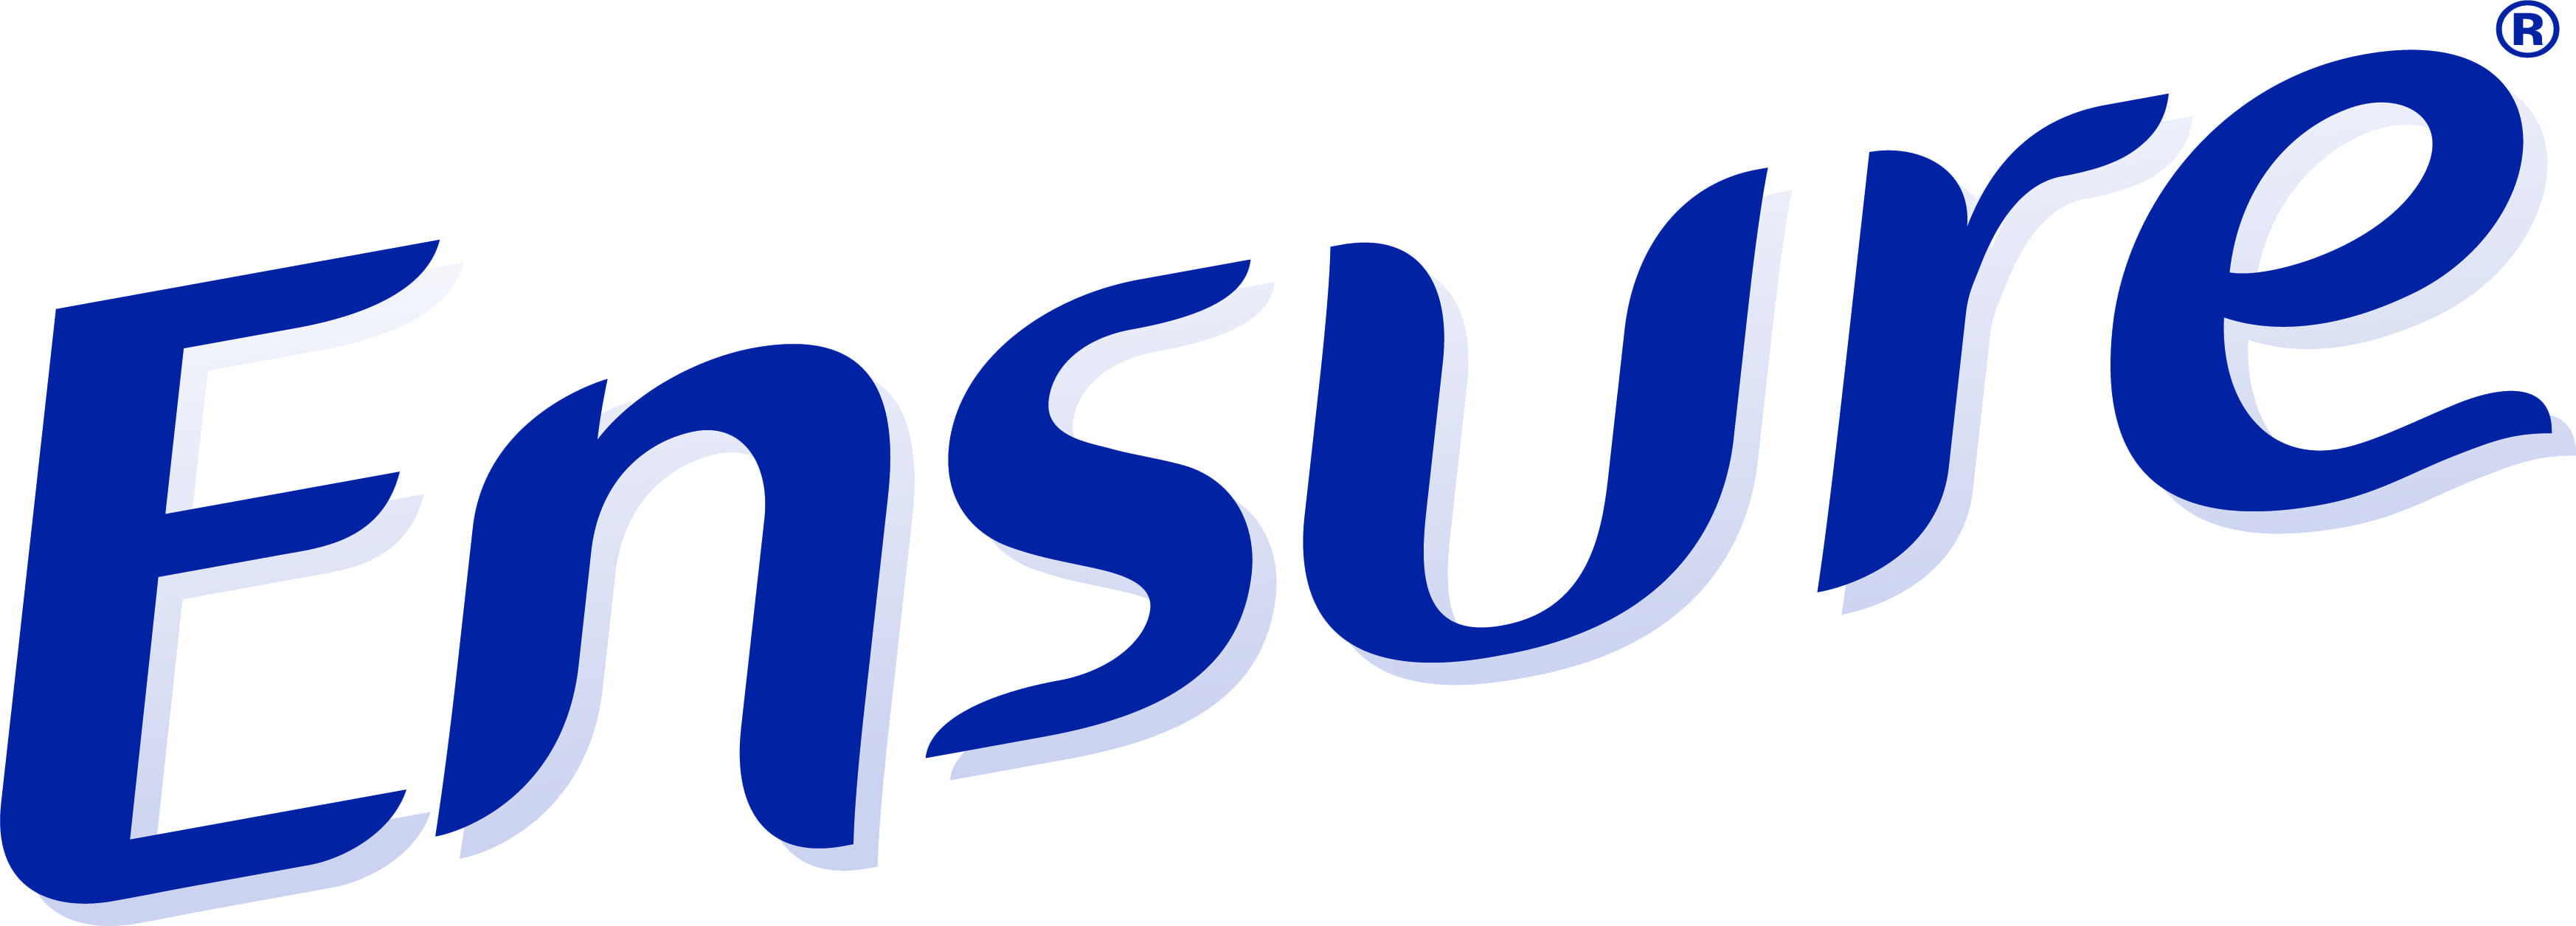 Ensure user. Ensure лого. Sundi лого. Track ensure logo. Dentiss logo.